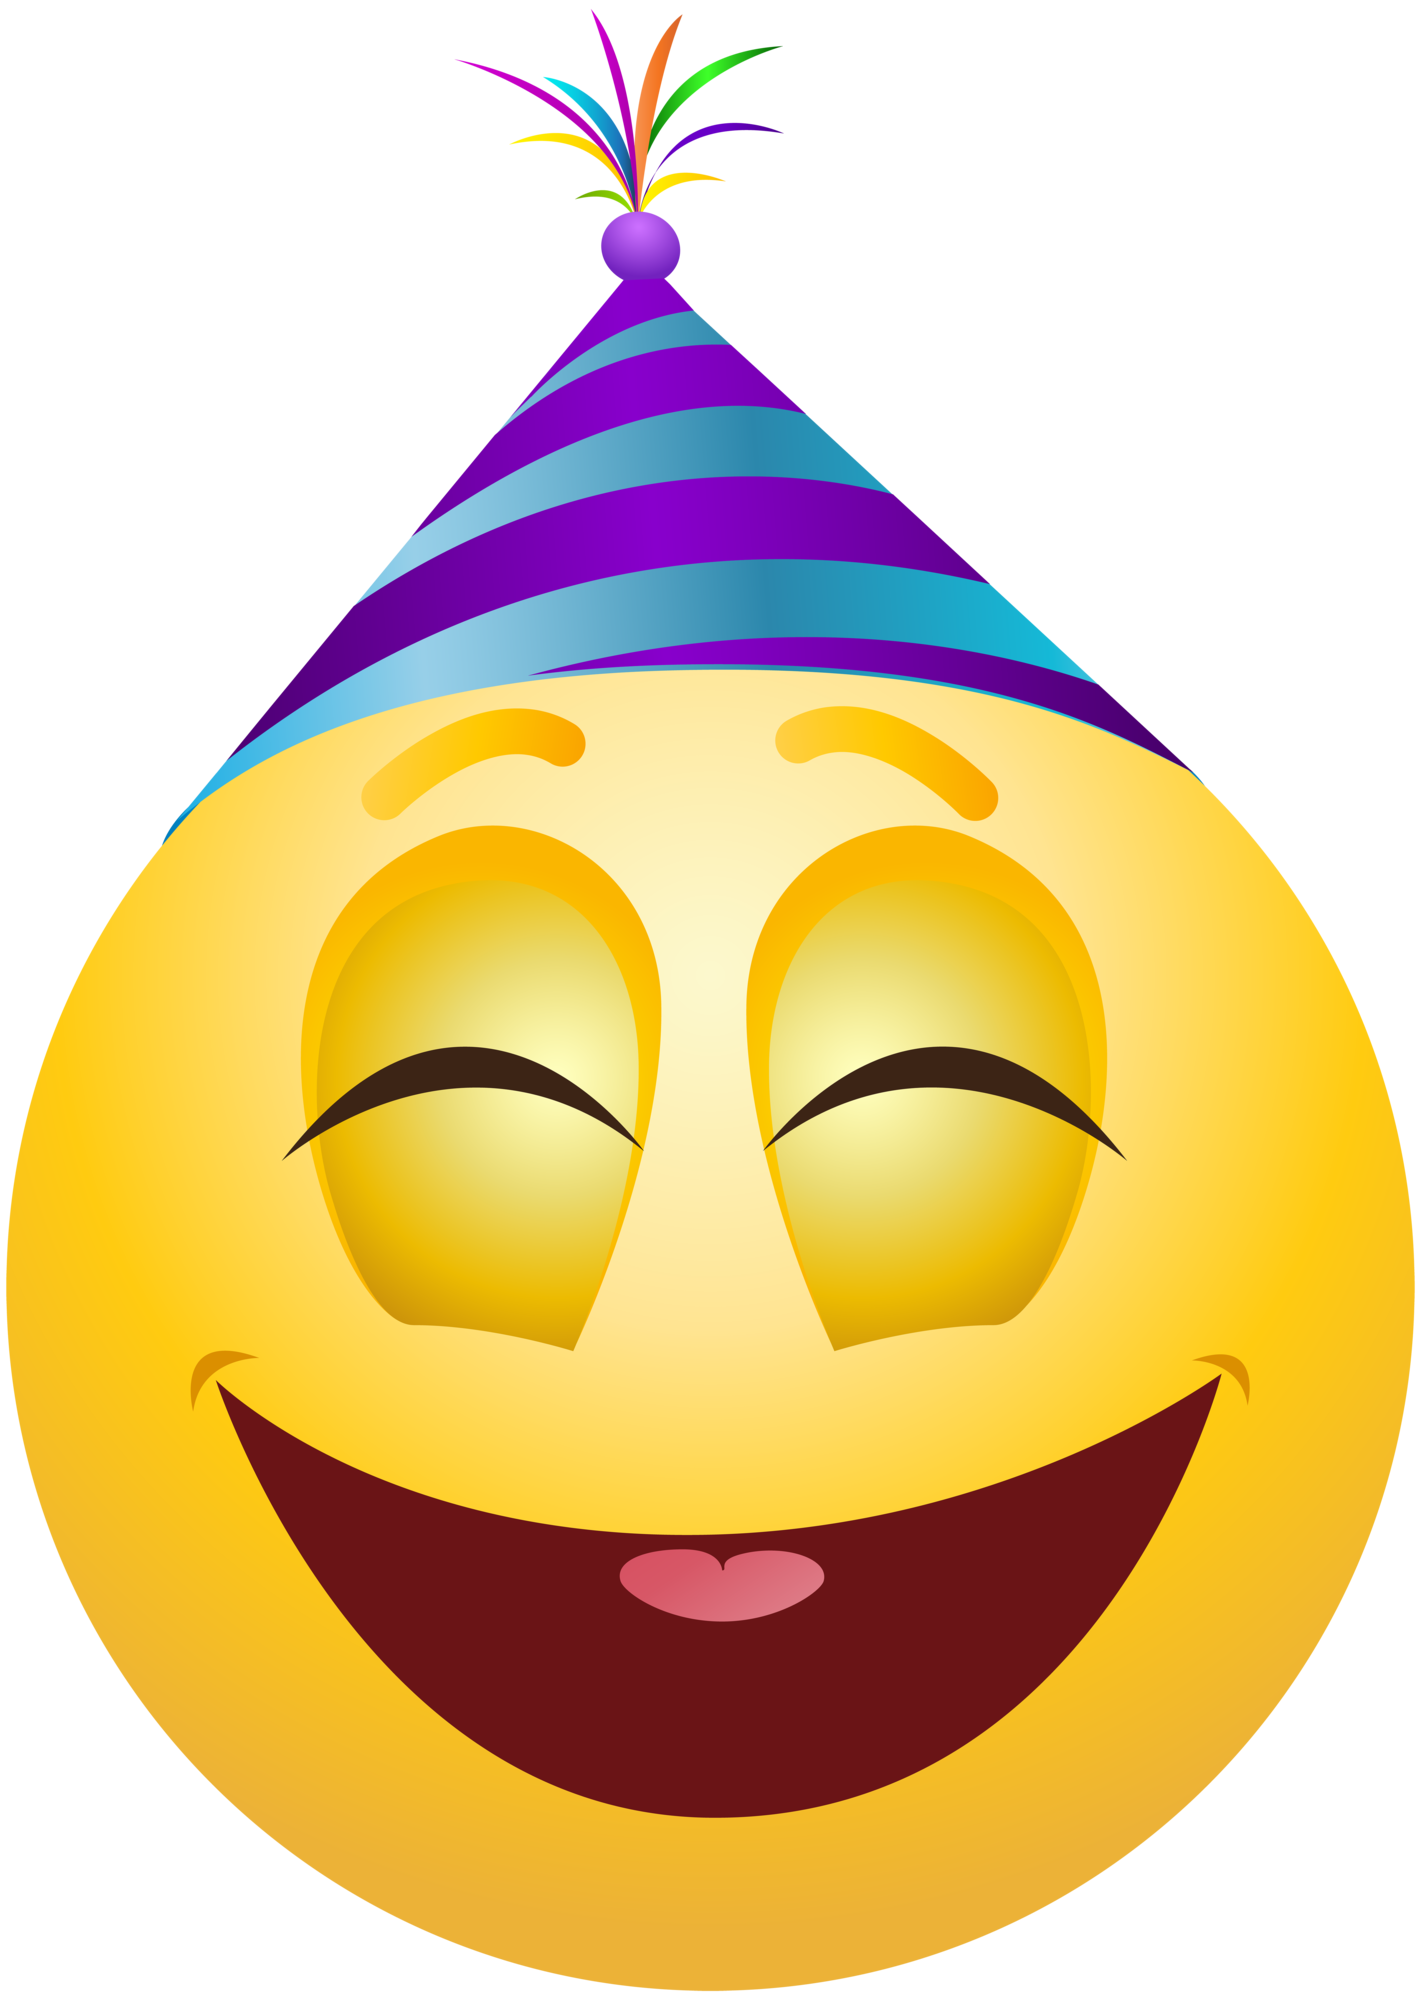 Party emoticon emoji Clipart info